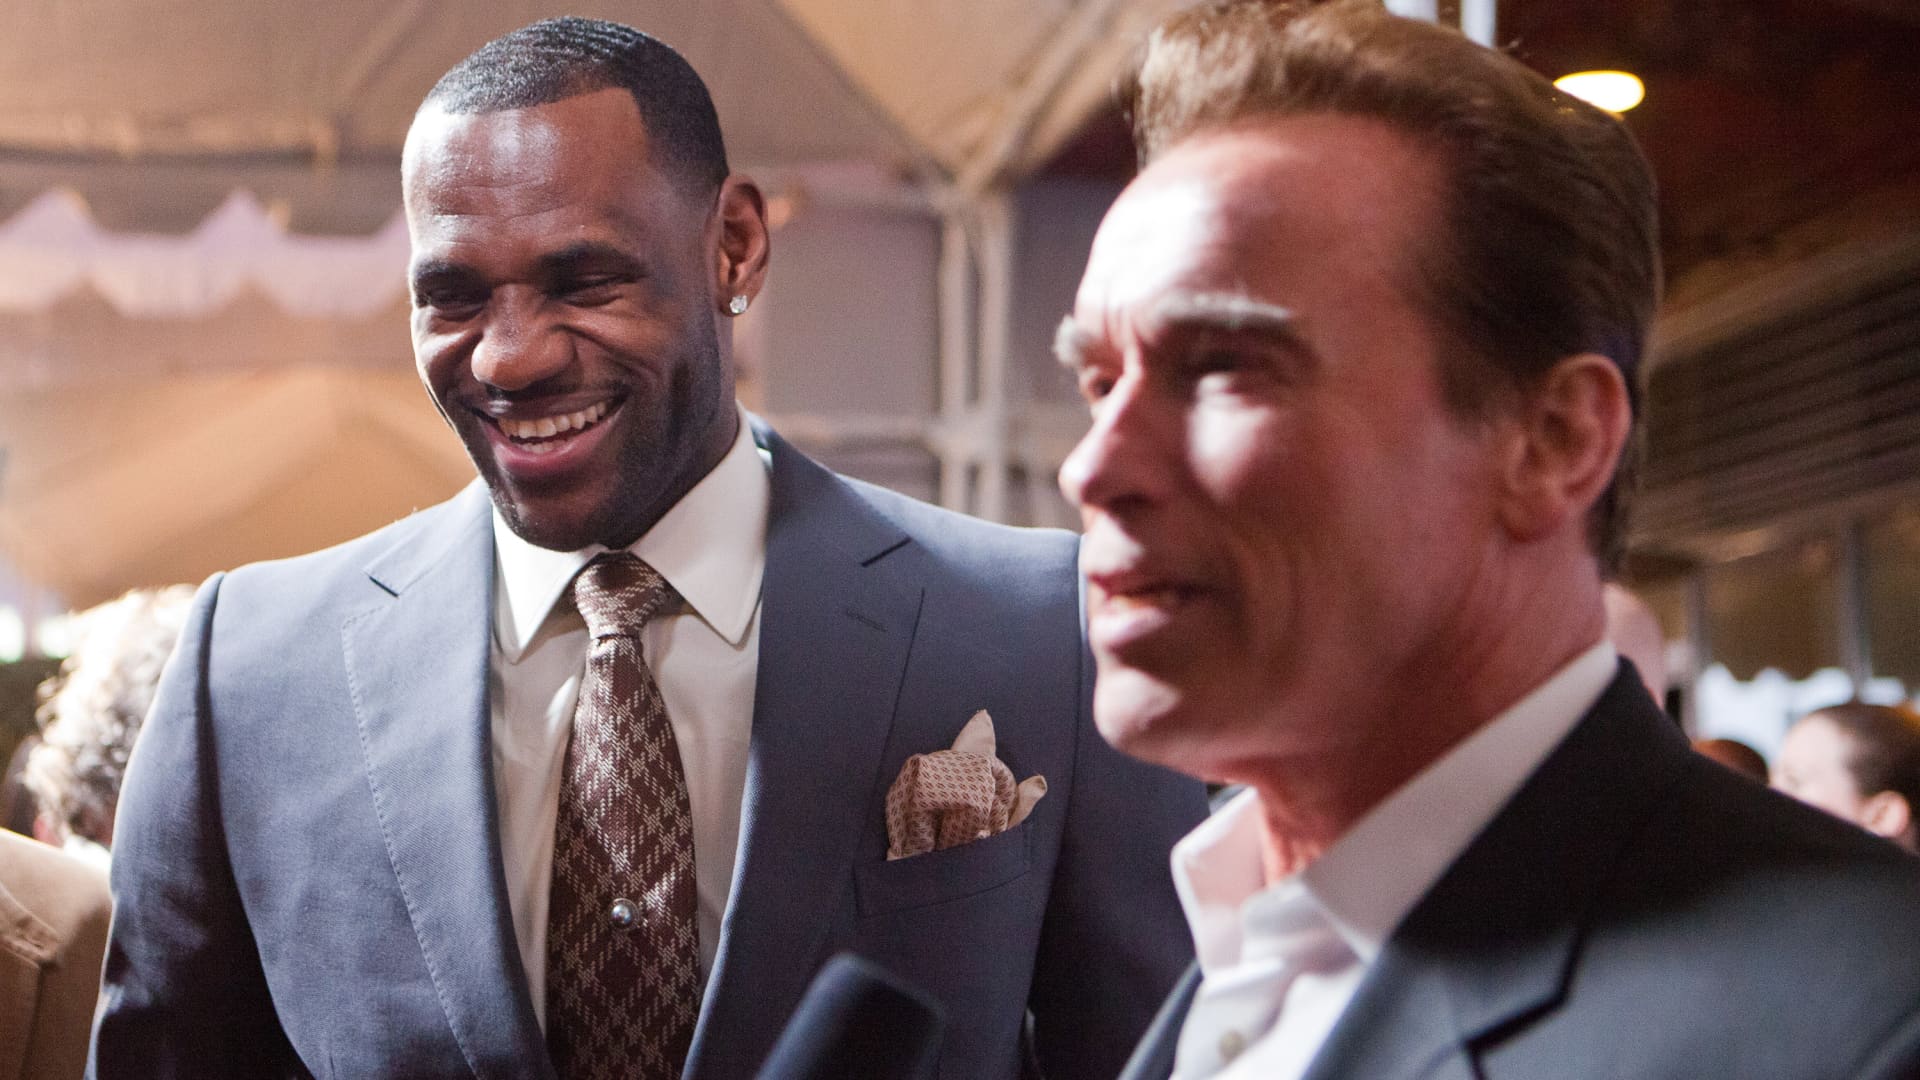 NBA player LeBron James and former California Governor Arnold Schwarzenegger in Los Angeles, California.